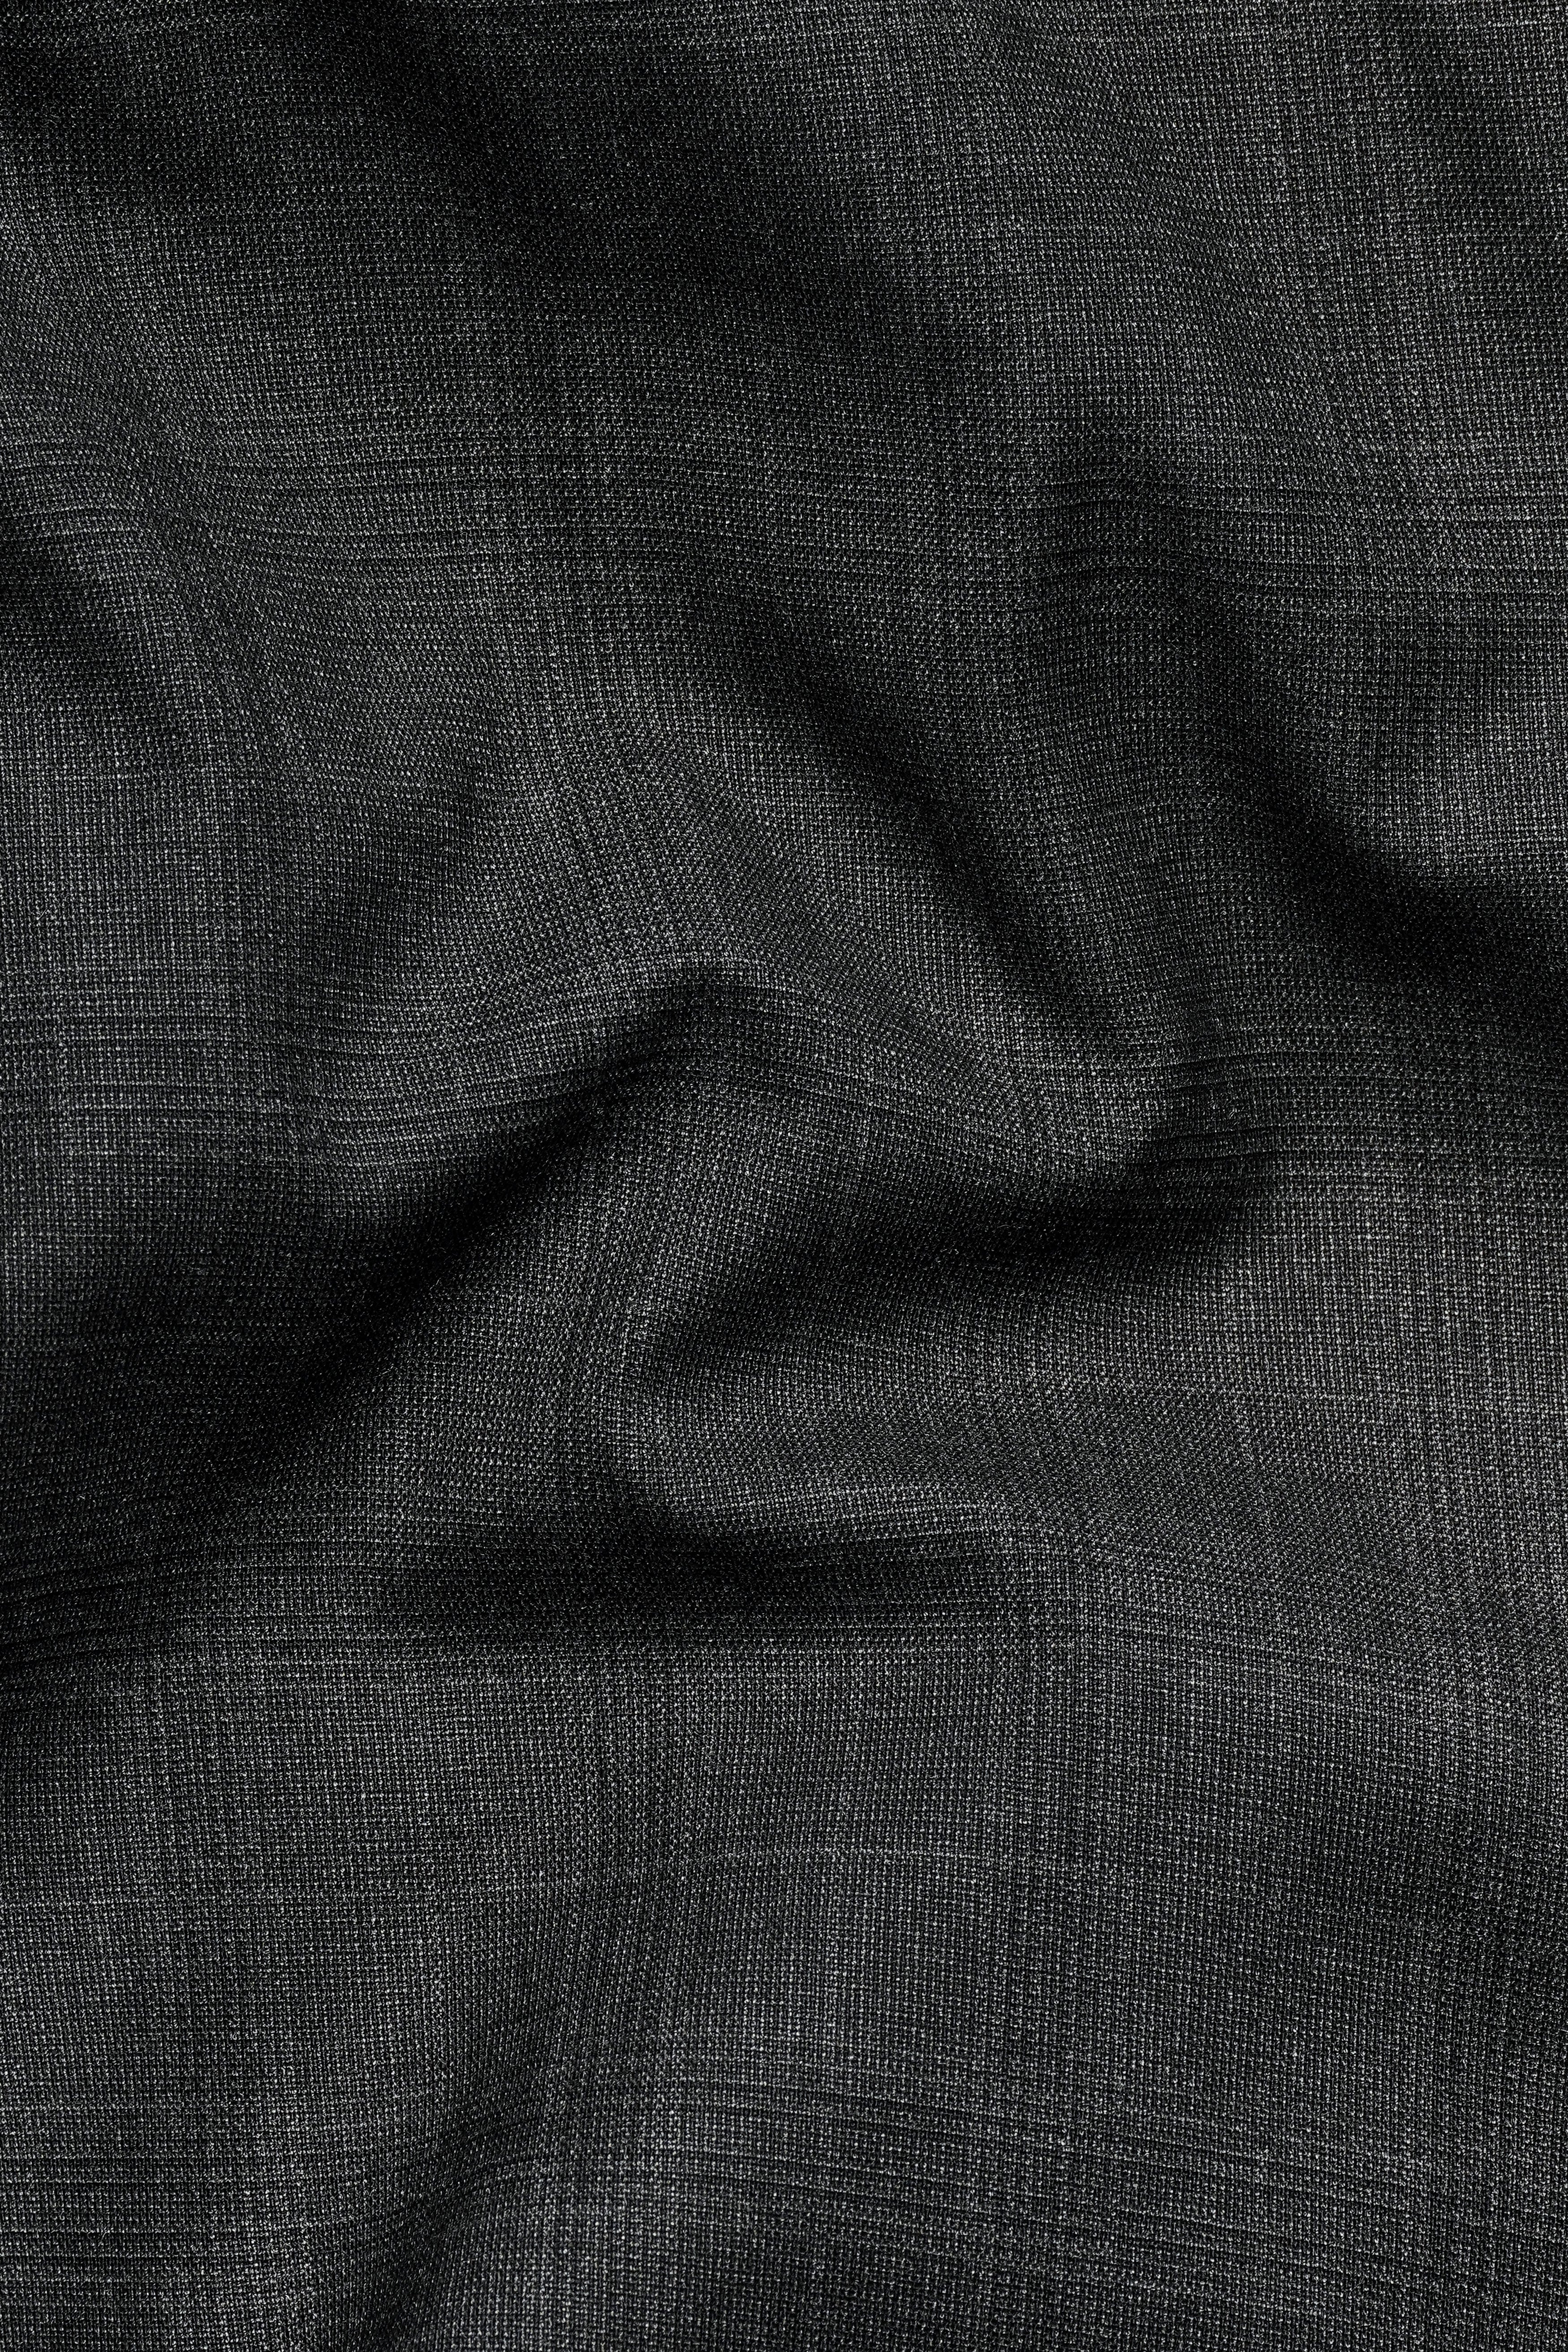 Iridium Gray Subtle Checkered Wool Rich Cross Buttoned Bandhgala Blazer